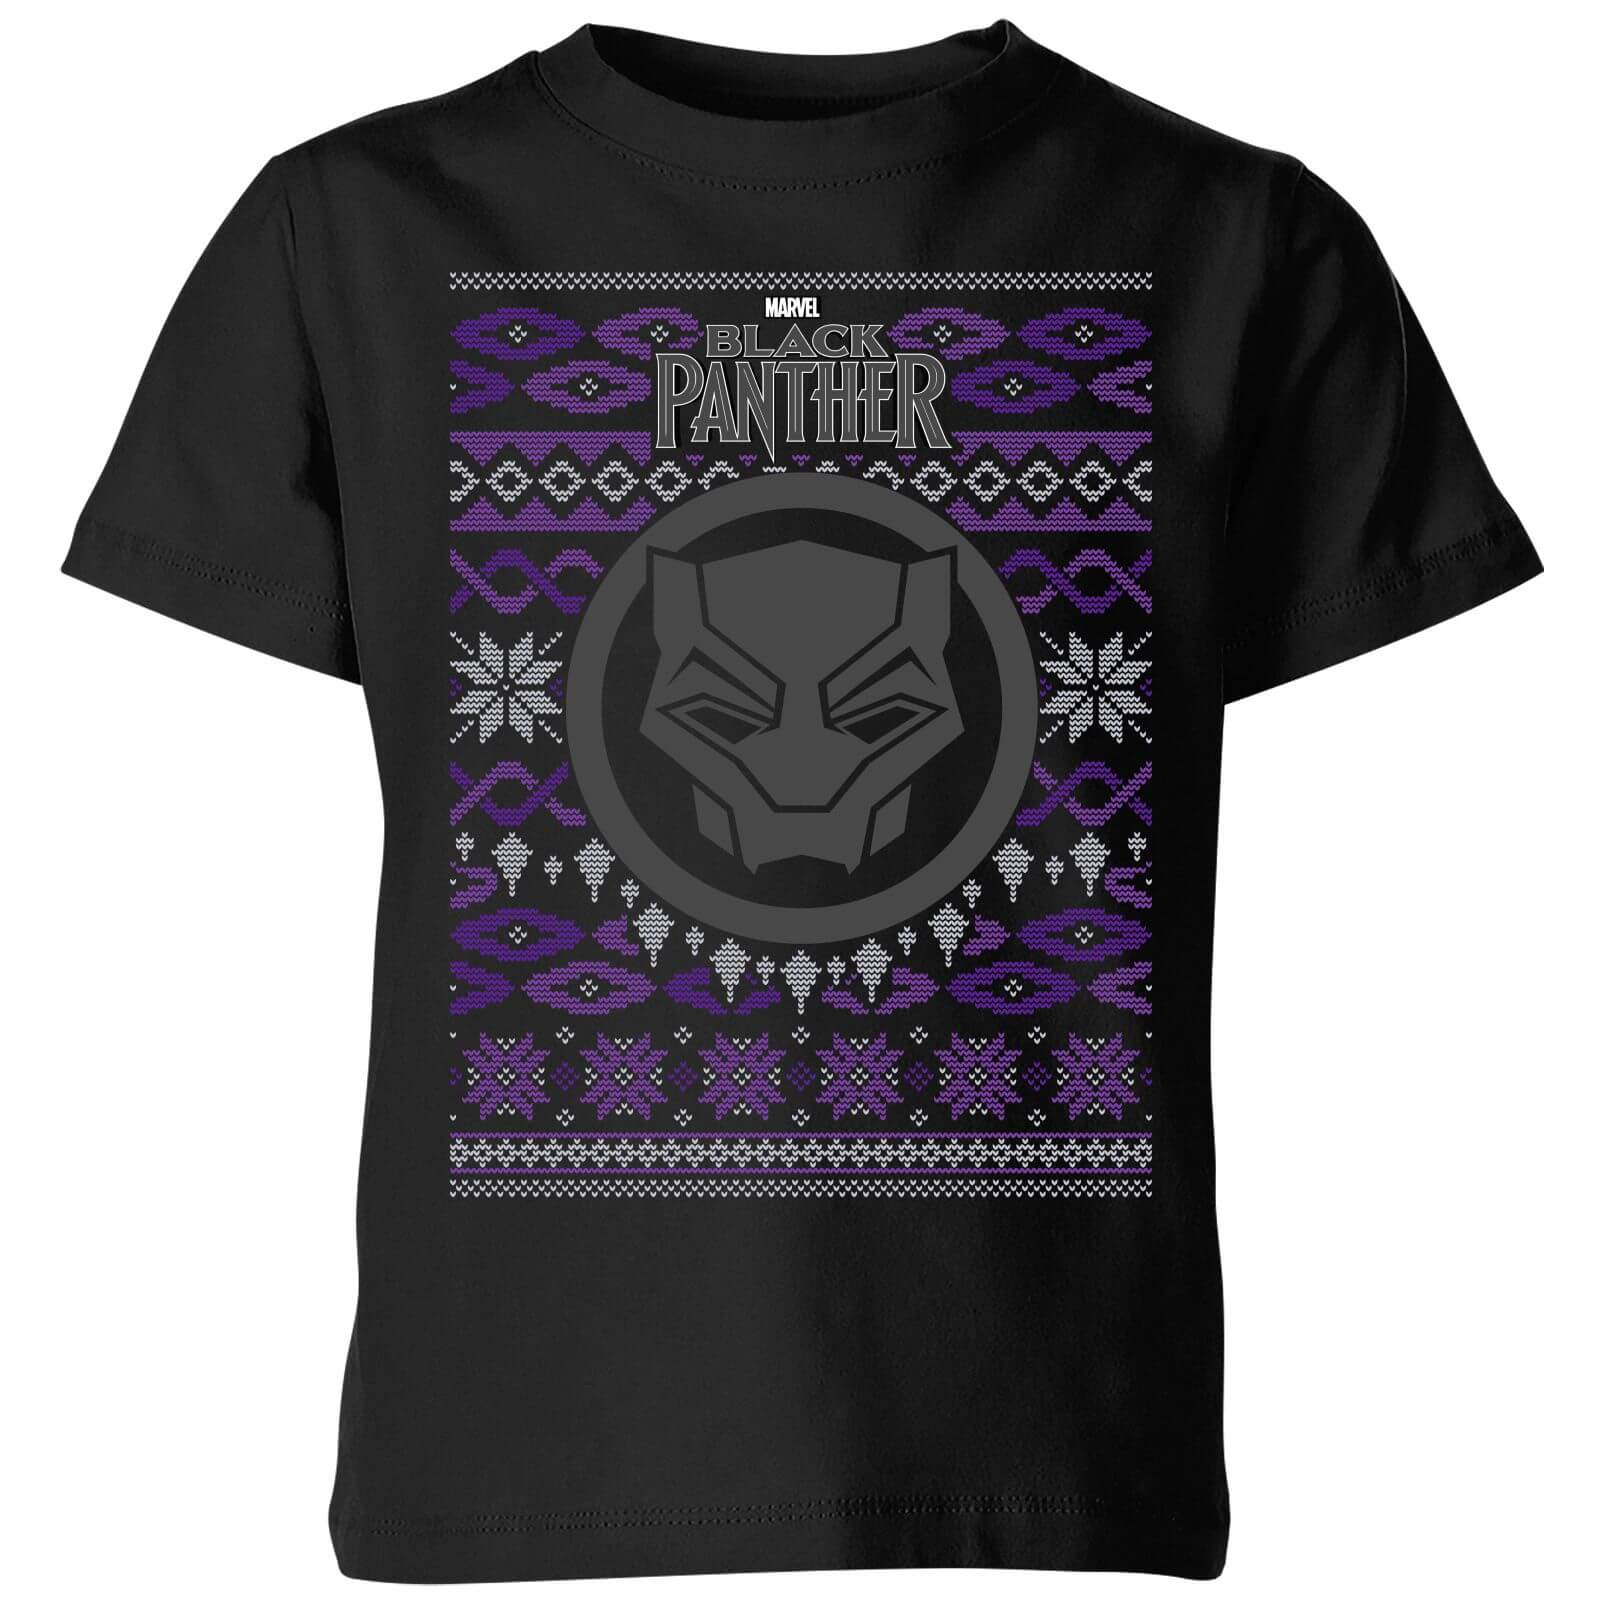 Marvel Avengers Black Panther Kids Christmas T-Shirt - Black - 11-12 Years - Black